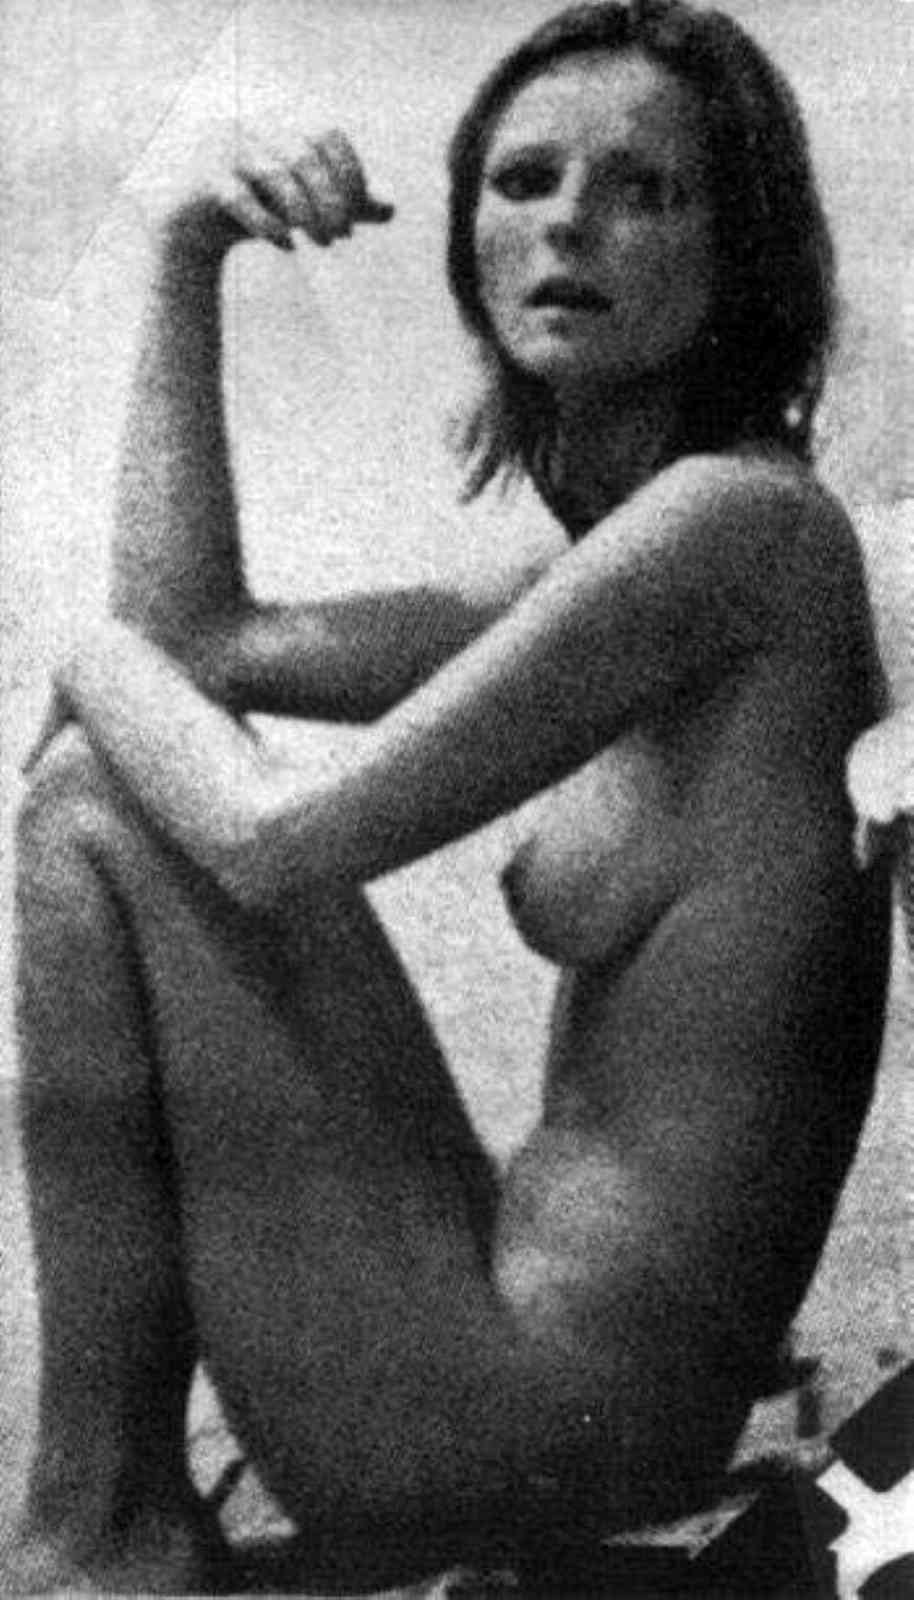 Cheryl Tiegs Nude Pictures. 